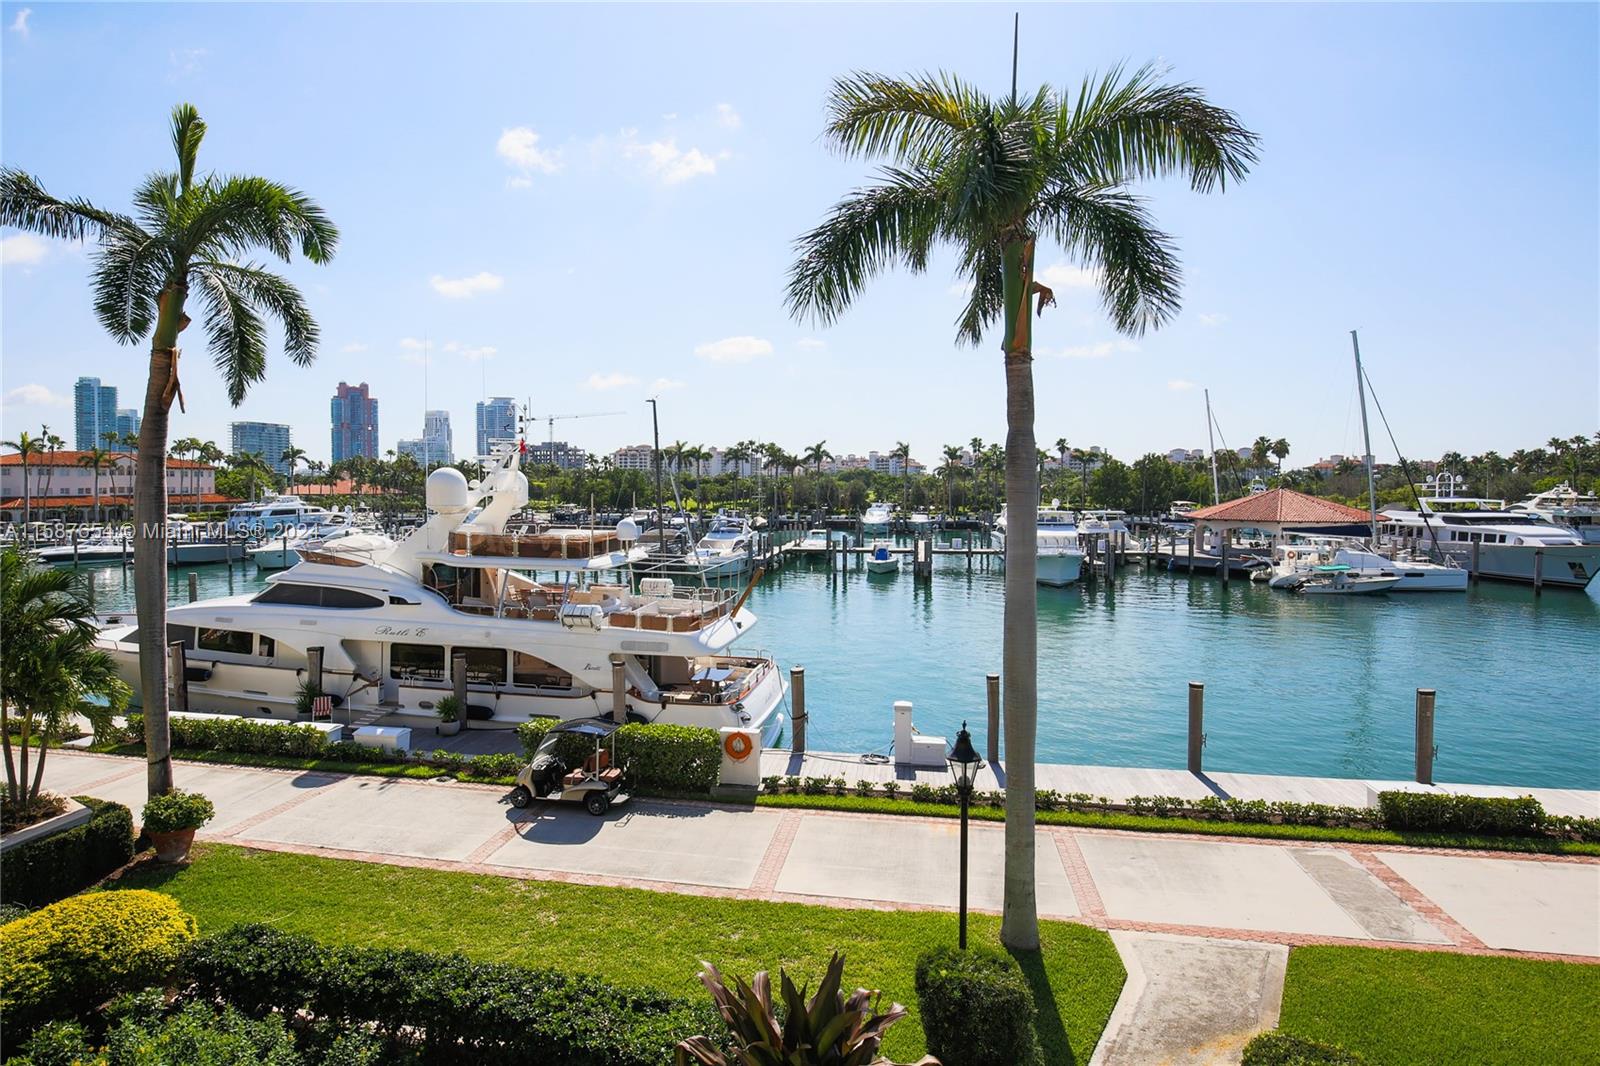 Rental Property at 15122 Fisher Island Dr 15122, Miami Beach, Miami-Dade County, Florida - Bedrooms: 2 
Bathrooms: 2  - $18,000 MO.